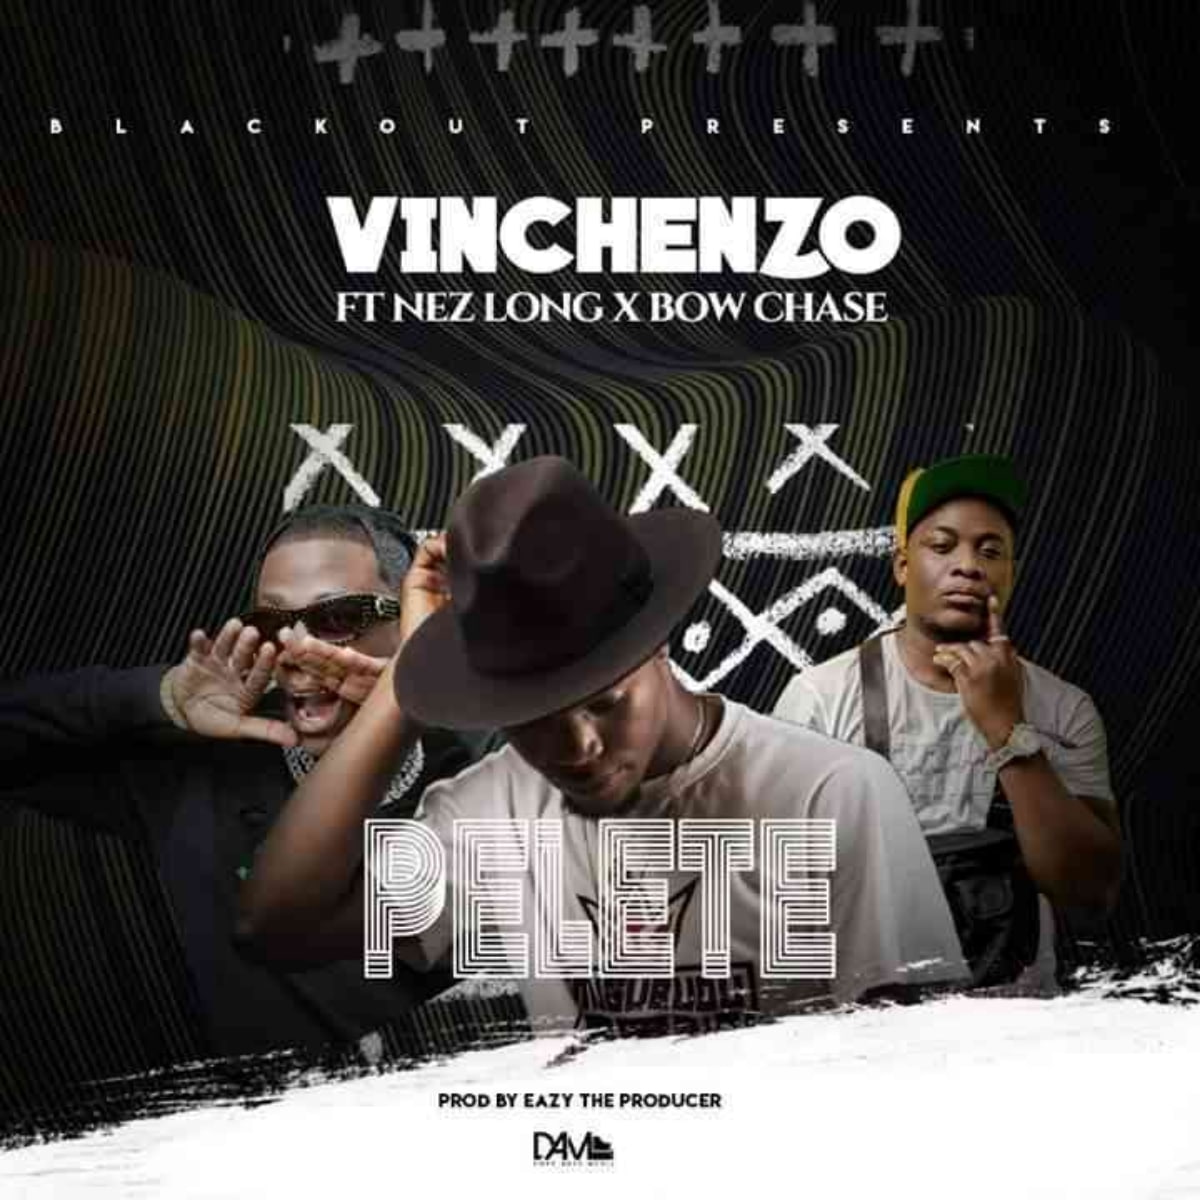 DOWNLOAD: Vinchenzo Ft Nez Long & Bow Chase – “Pelete” Mp3